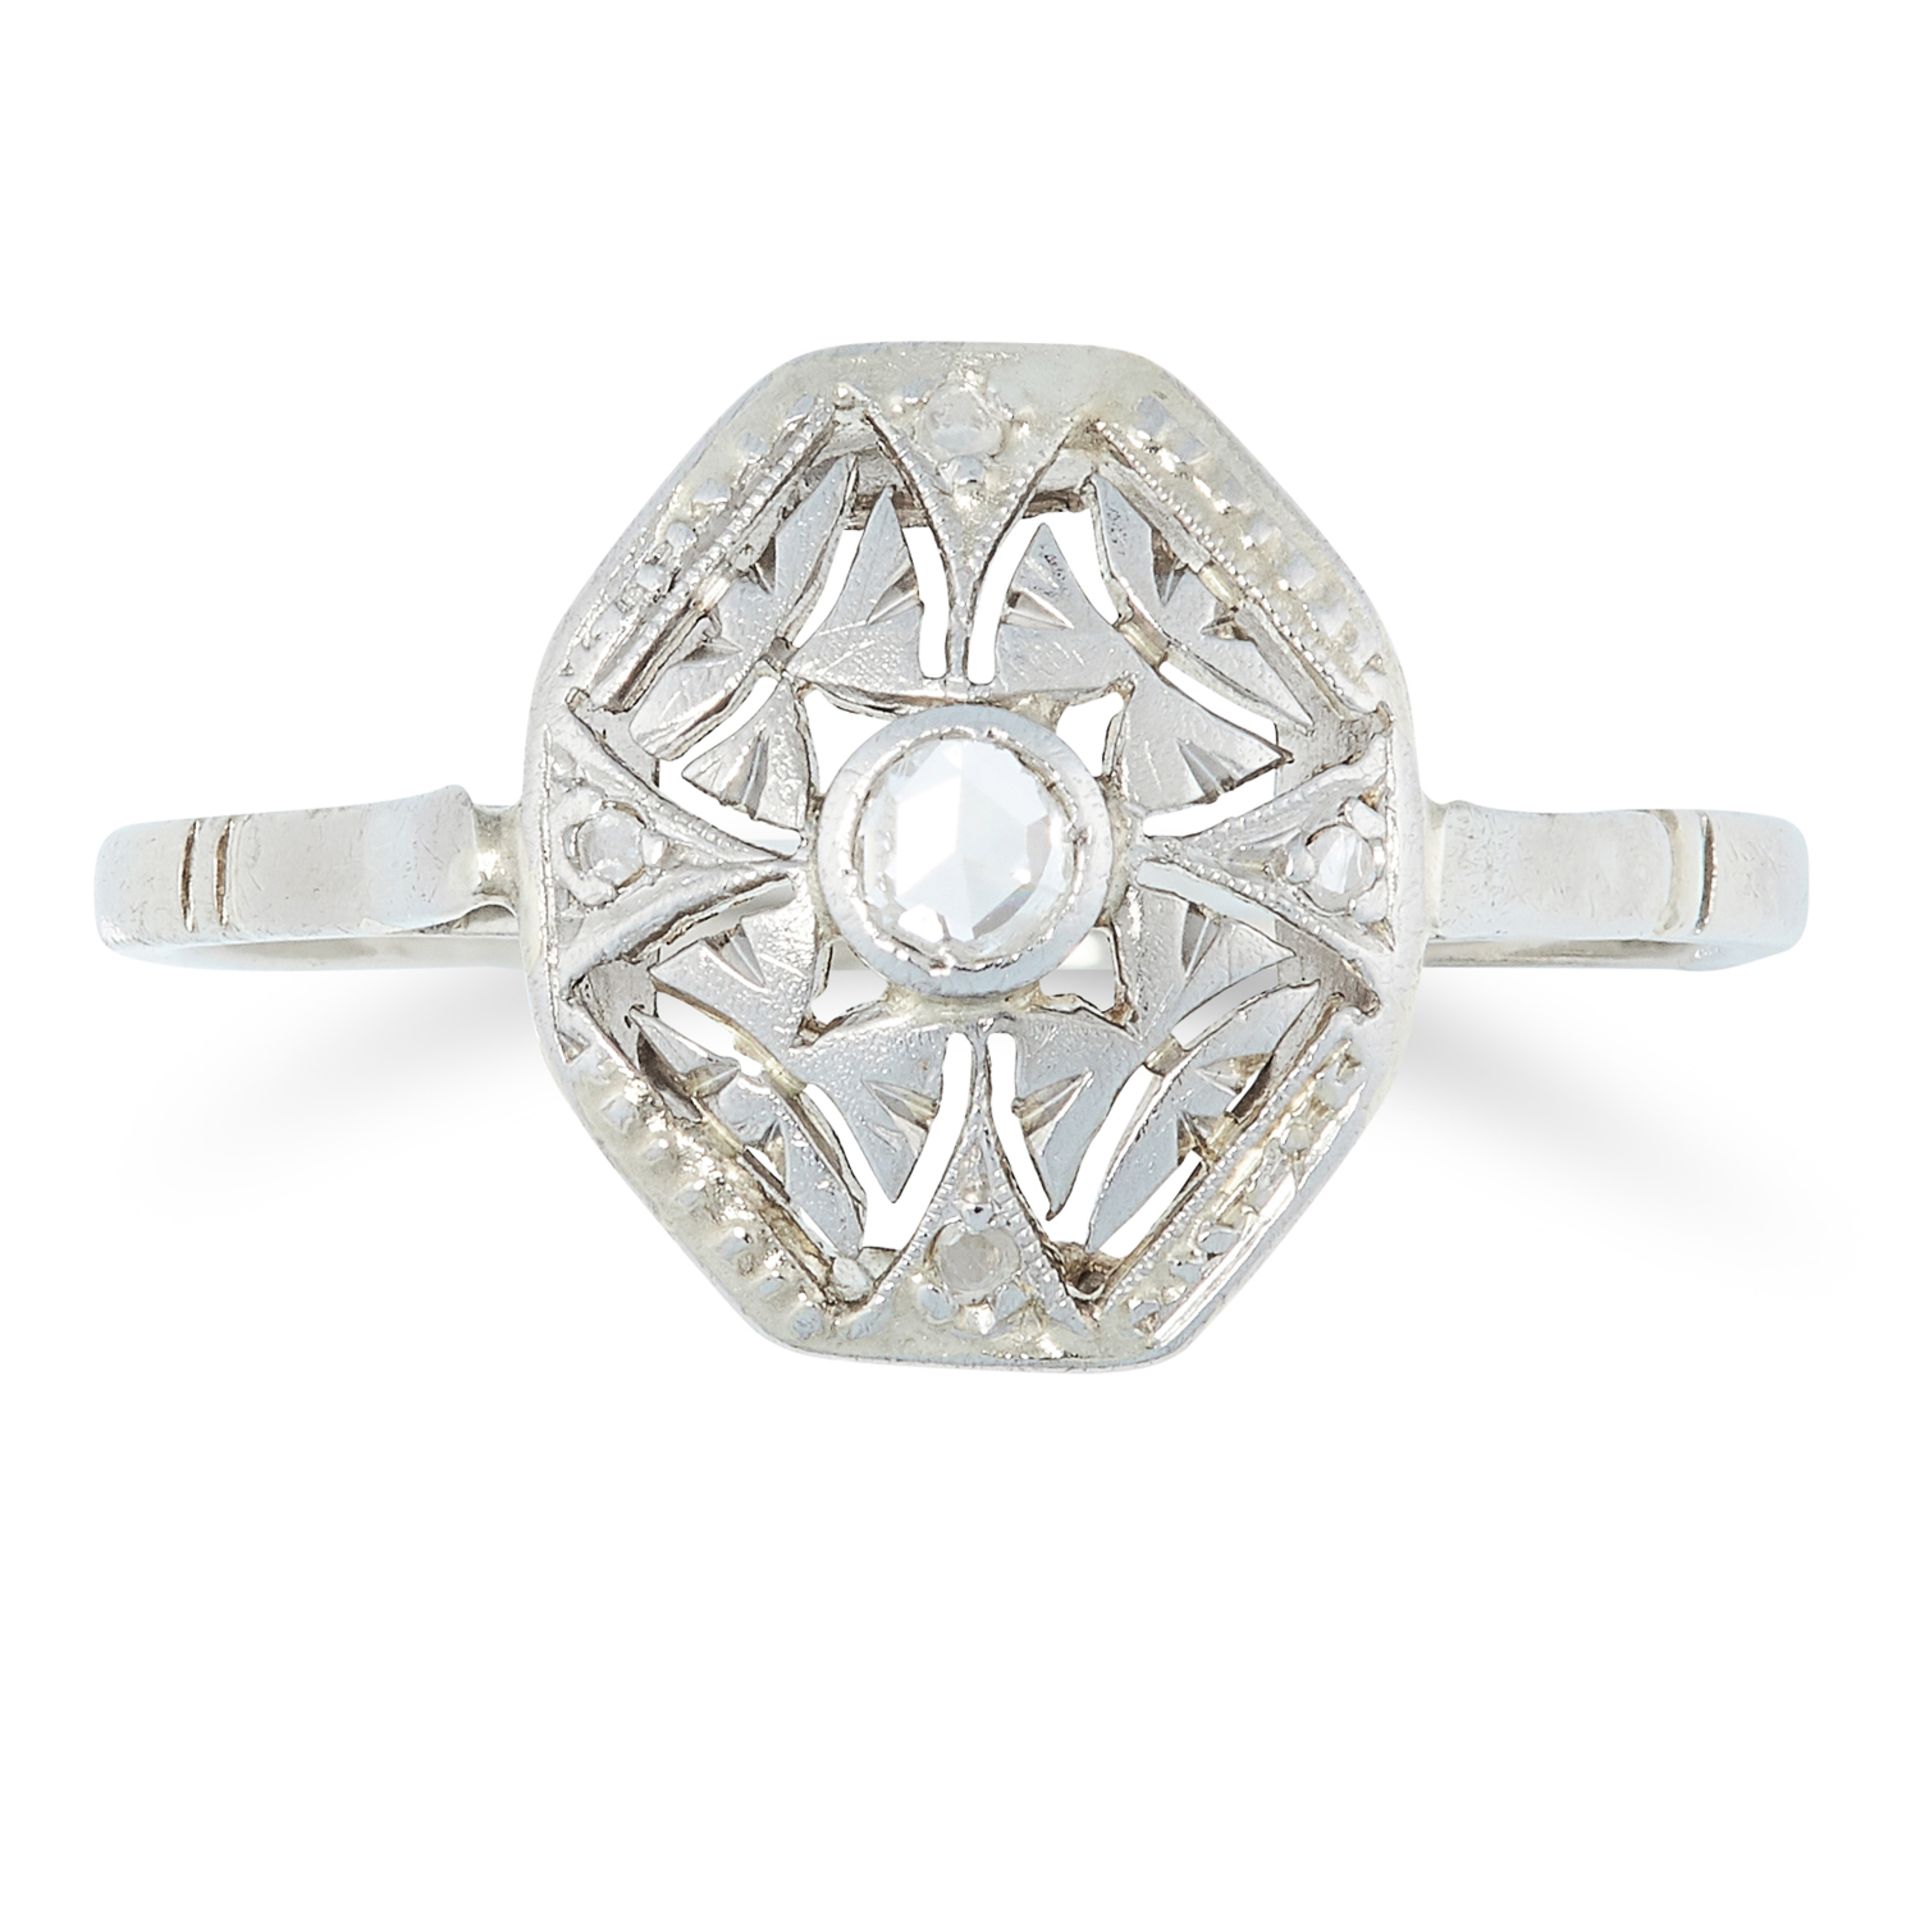 AN ANTIQUE DIAMOND DRESS RING the pierced octagonal face set with five rose cut diamonds, size O /